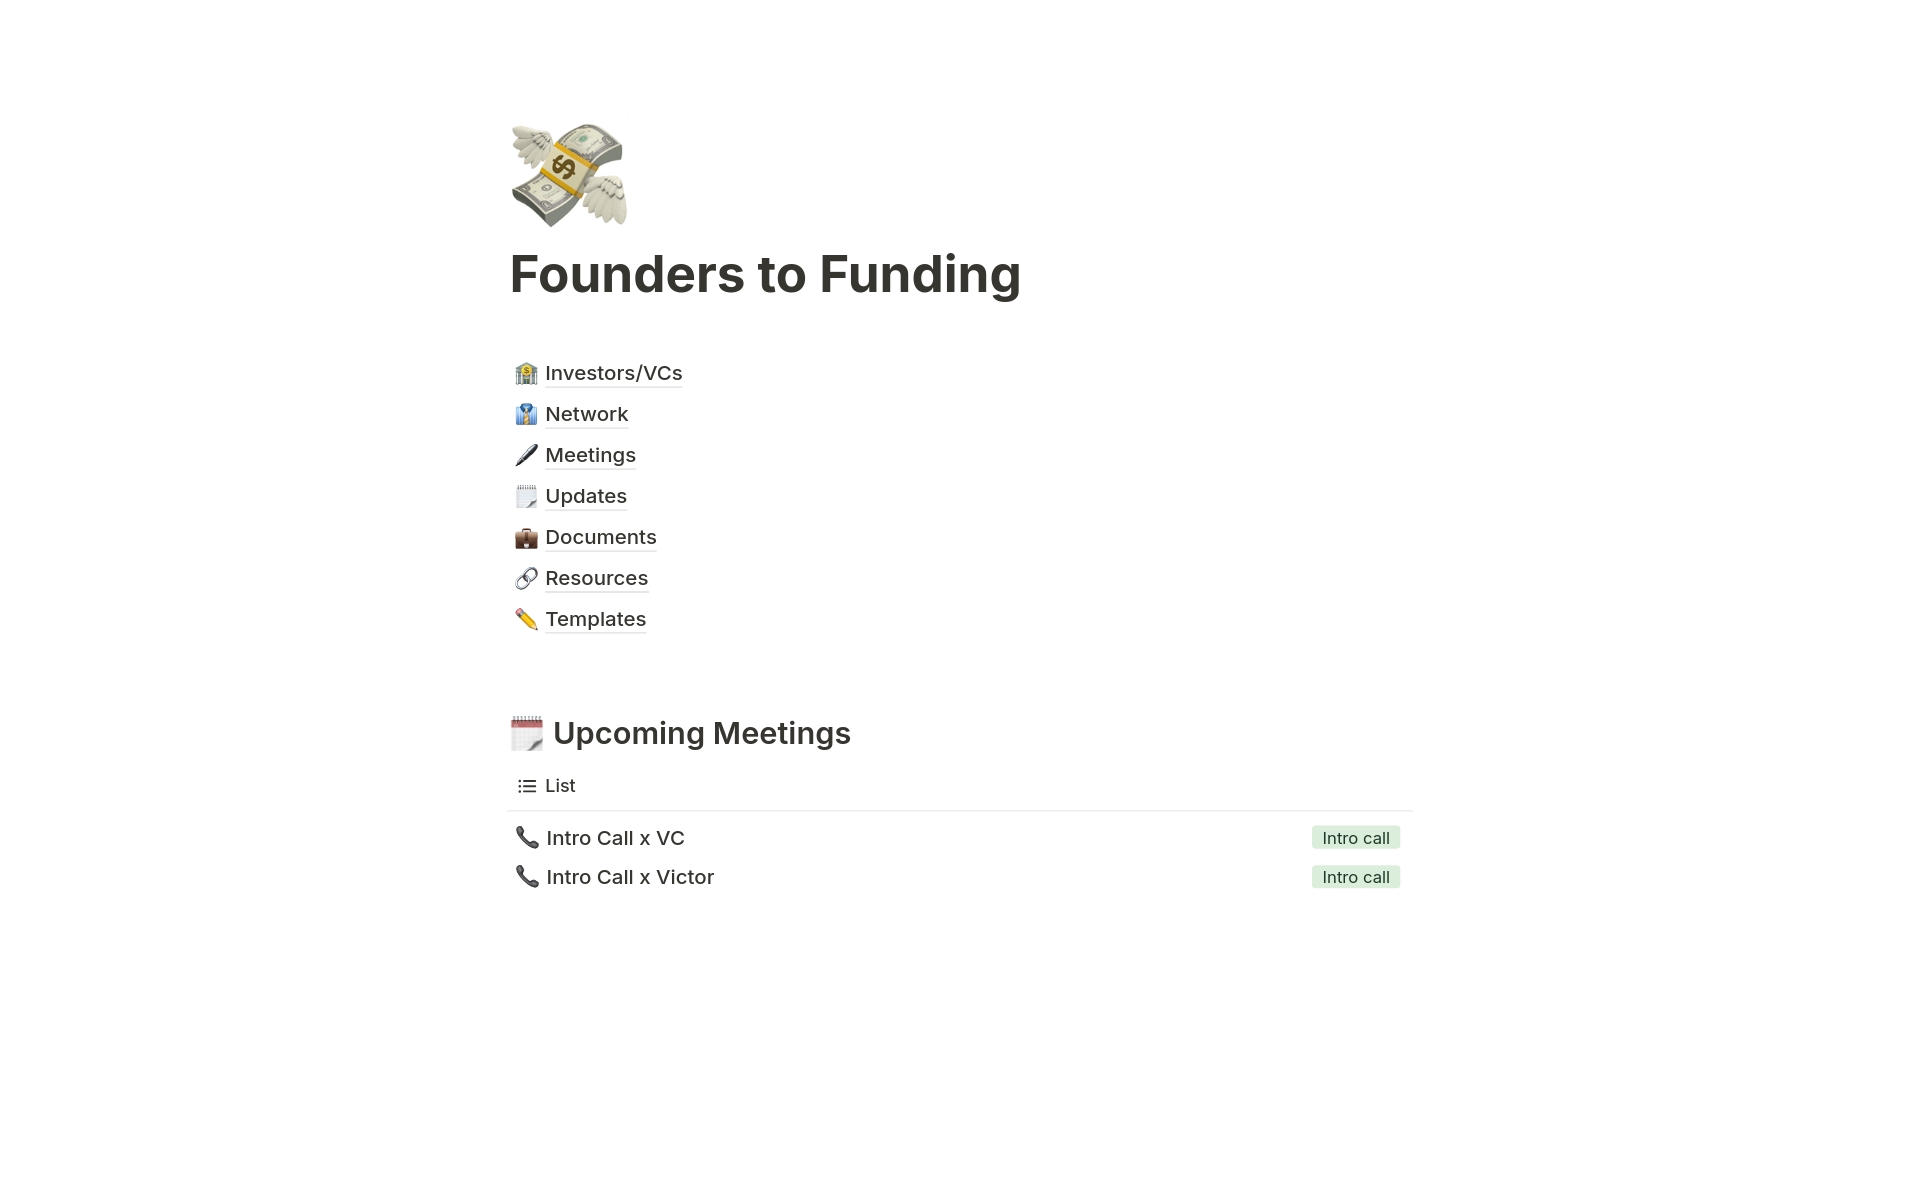 Vista previa de plantilla para Founders to Funding